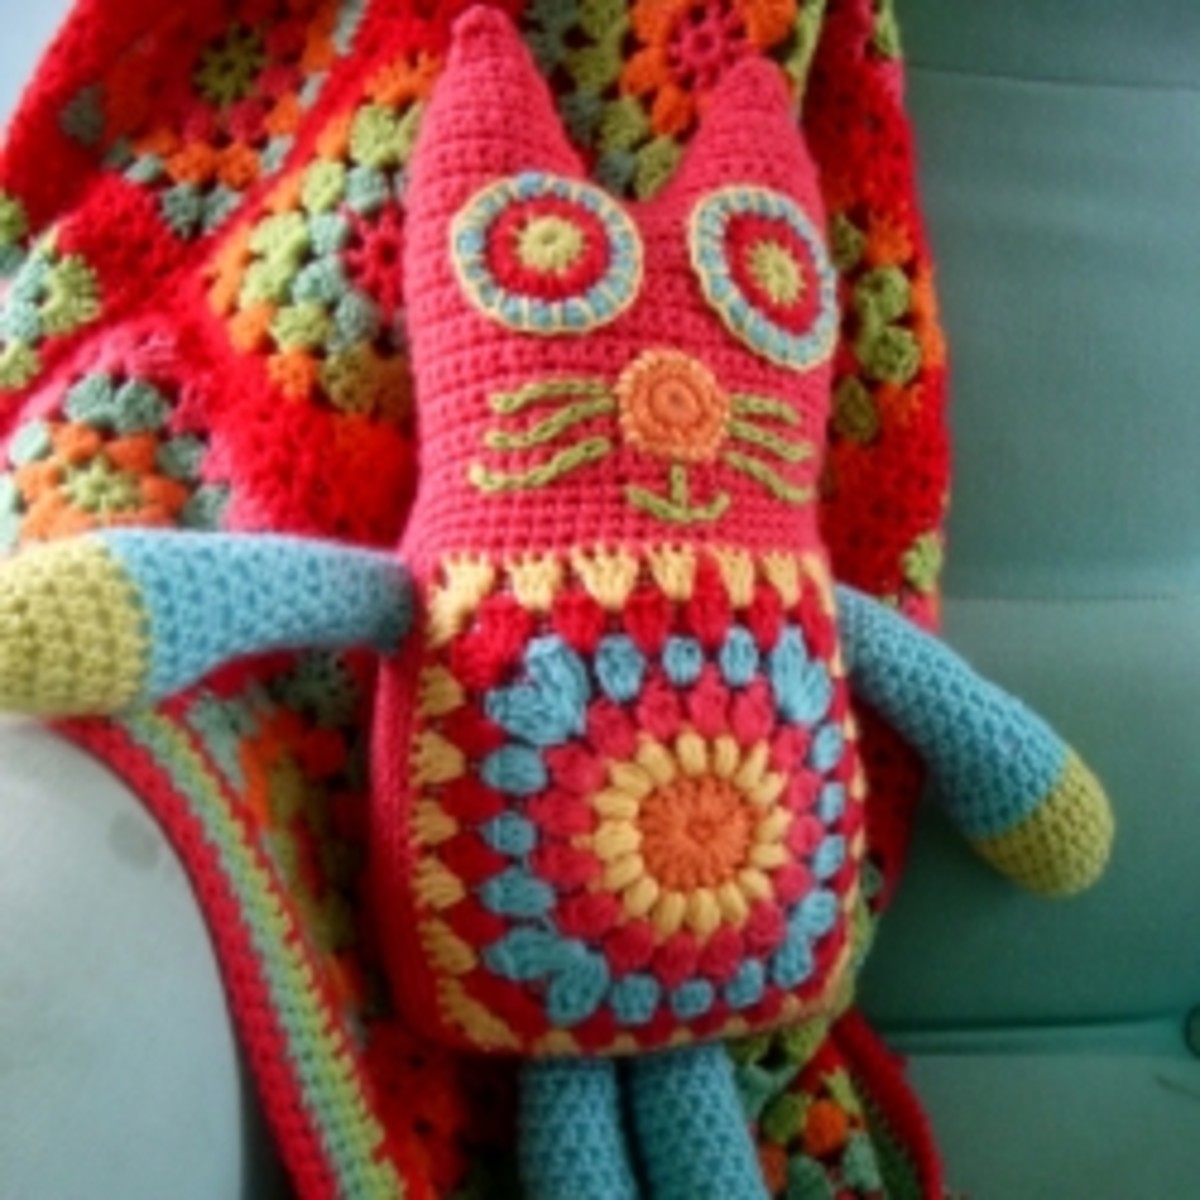 Free Crochet Toy Patterns